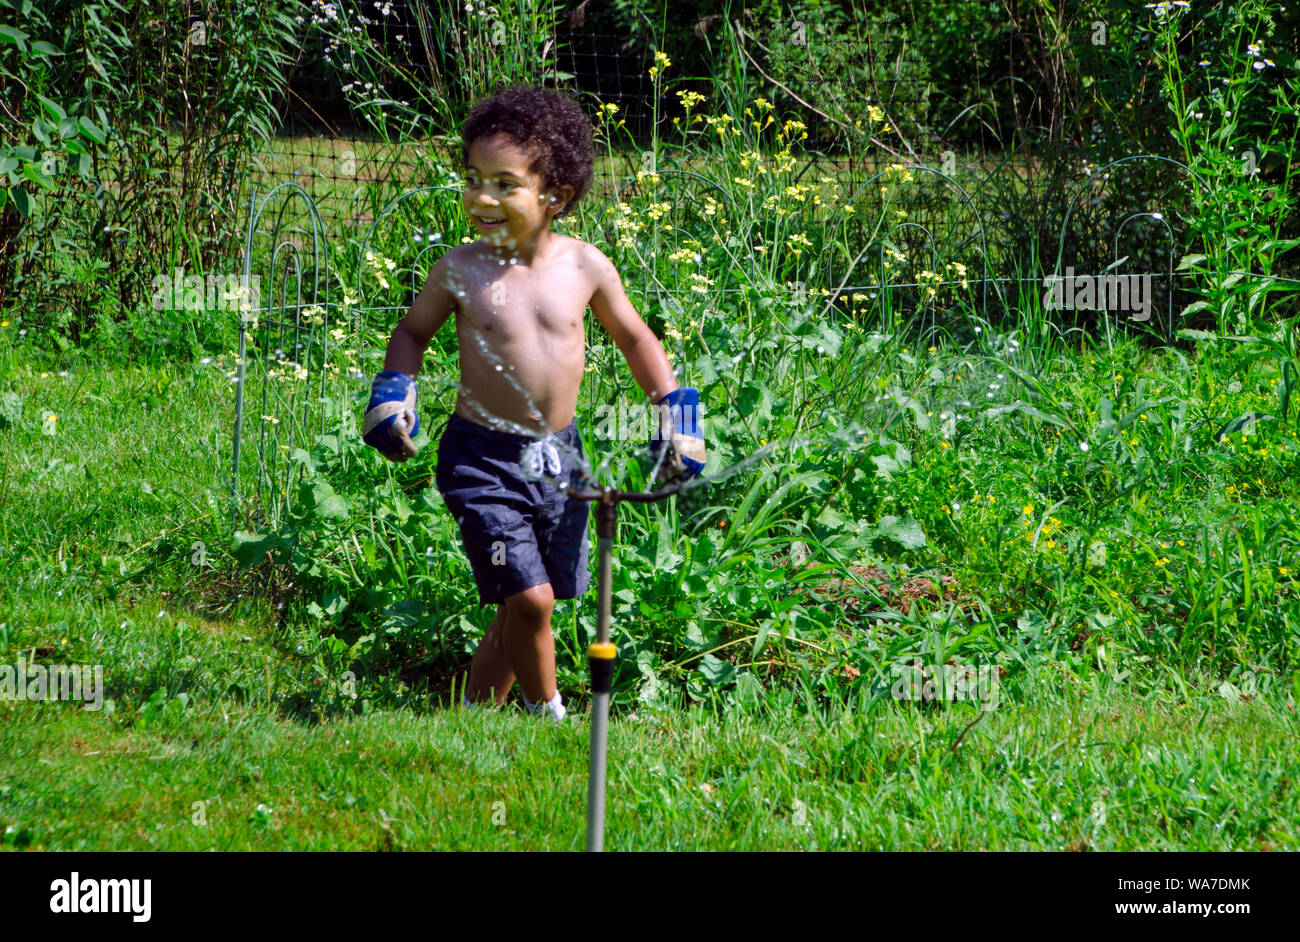 Boy playing in sprinkler in summer garden, Yarmouth community garden, Maine, USA Stock Photo